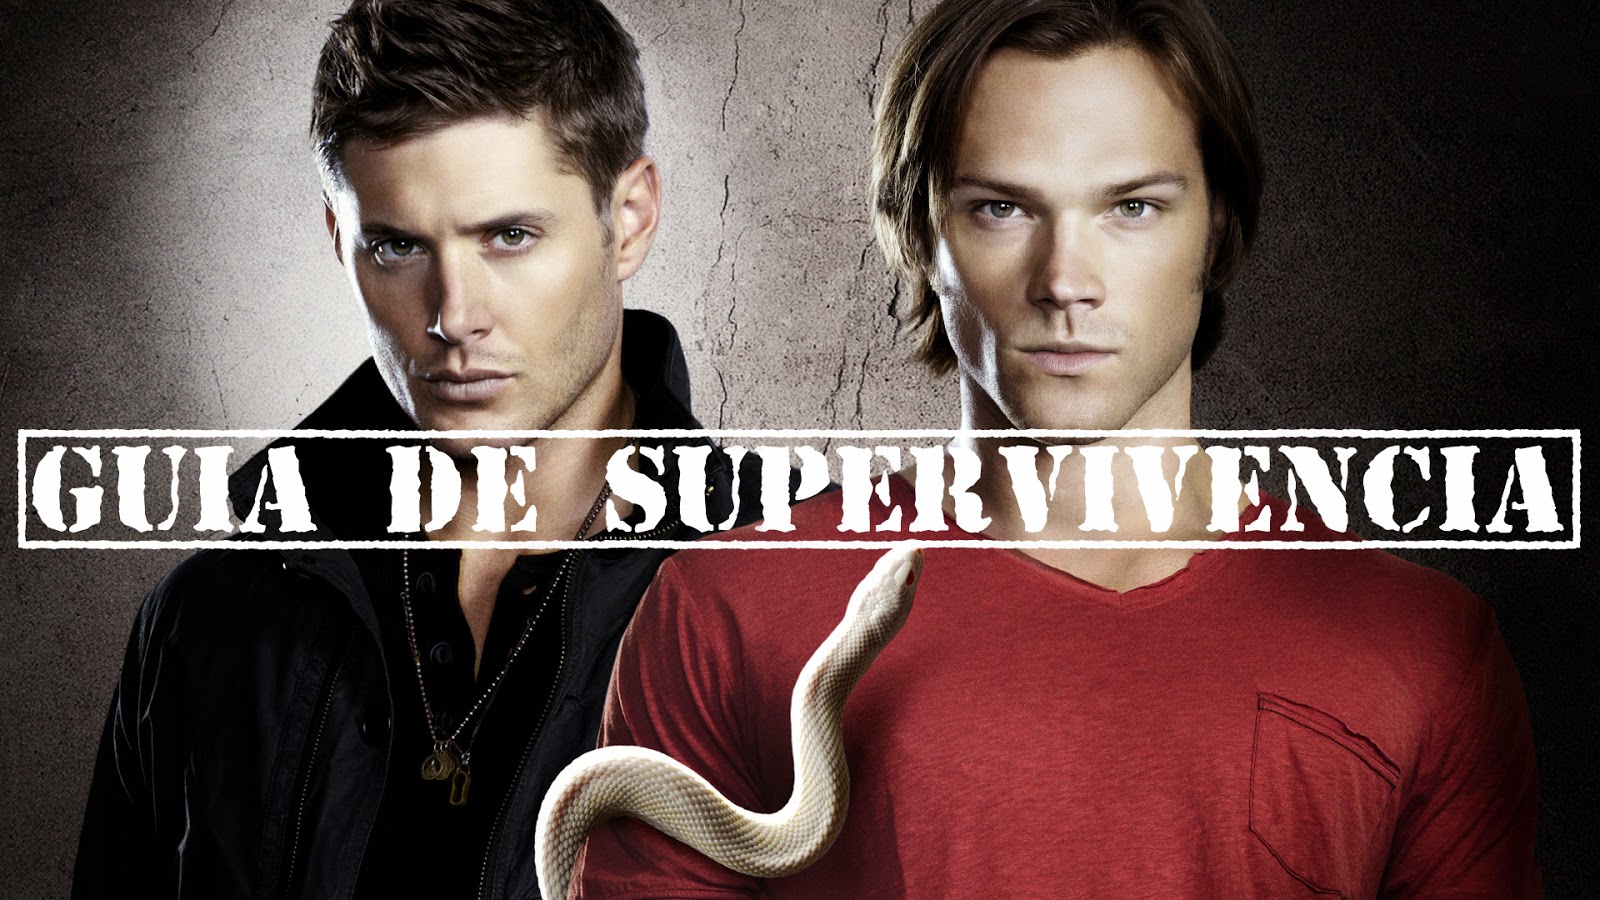 Supernatural-Sobrenatural-Guía-Supervivencia-Vampiros-Brujas-Fantasmas-Demonios-Ángeles